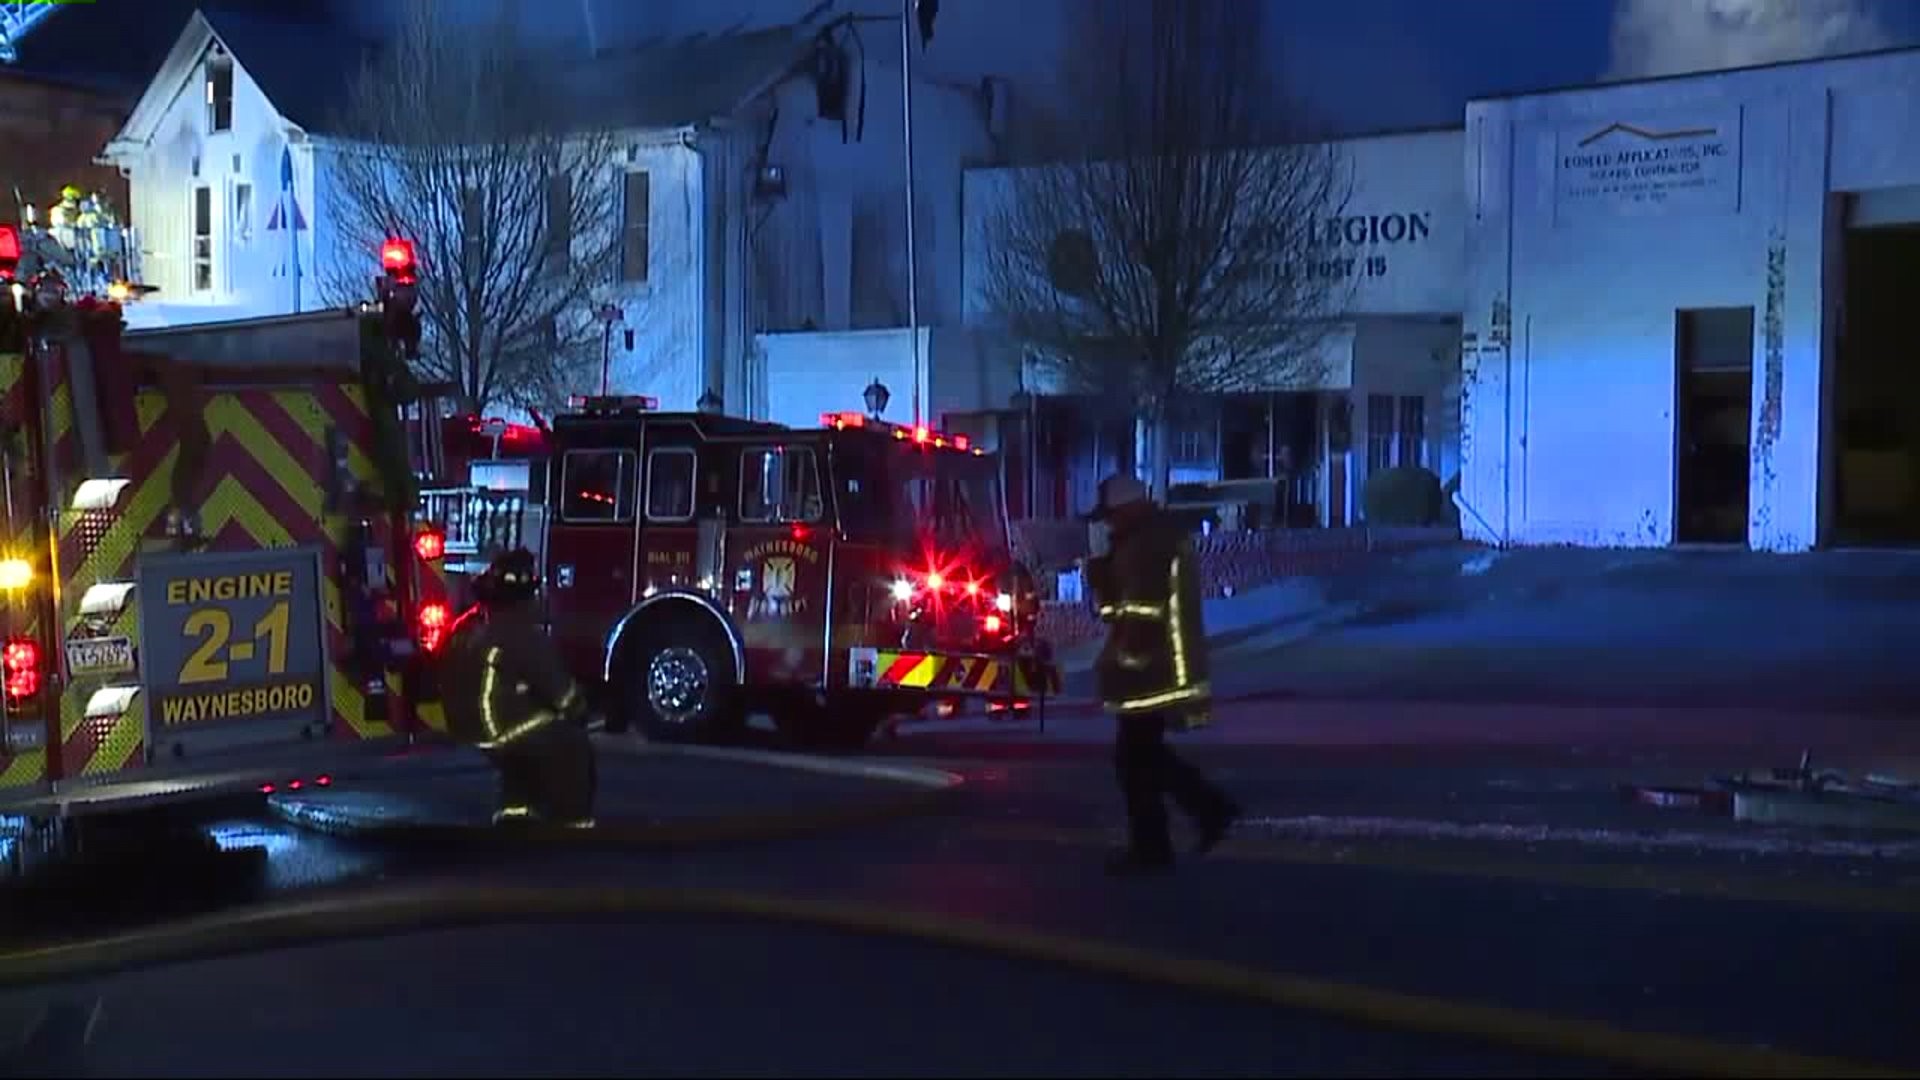 Crews on the scene of fire at American Legion in Waynesboro